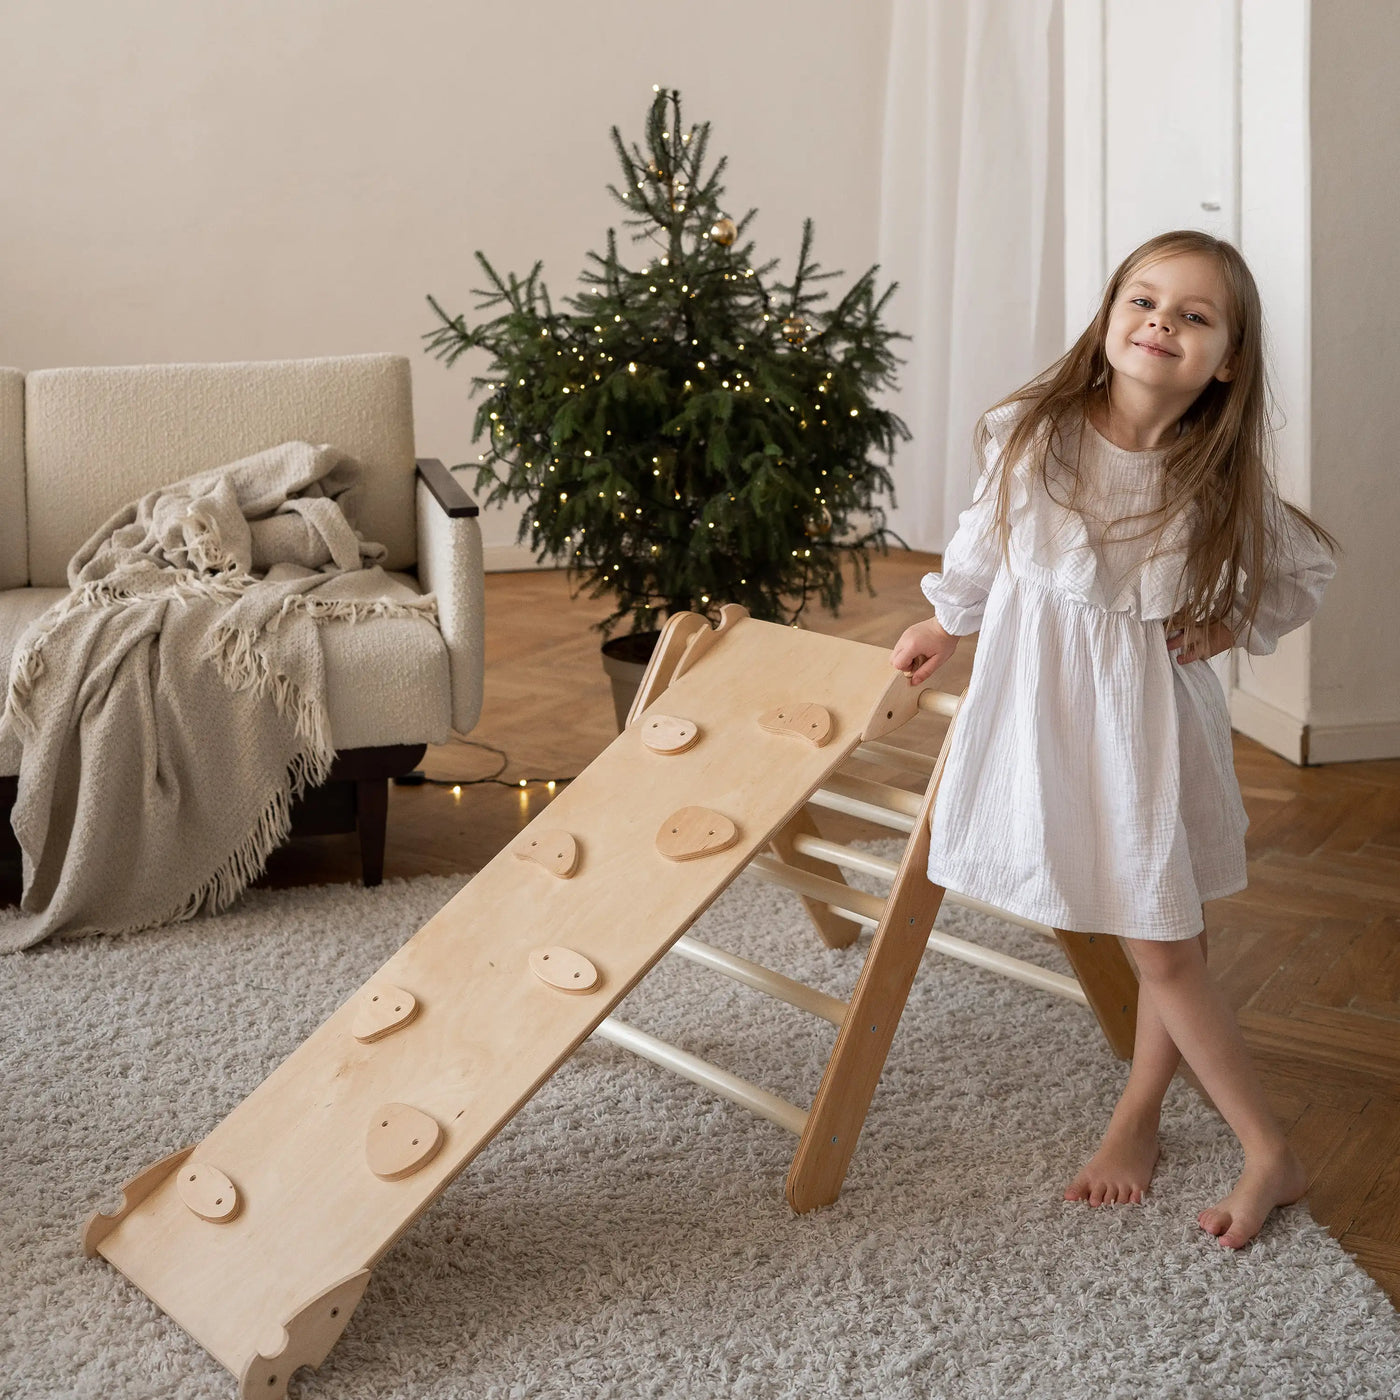 Find #1 Selling Medium Handmade Wooden Pikler Triangle for Kids 4